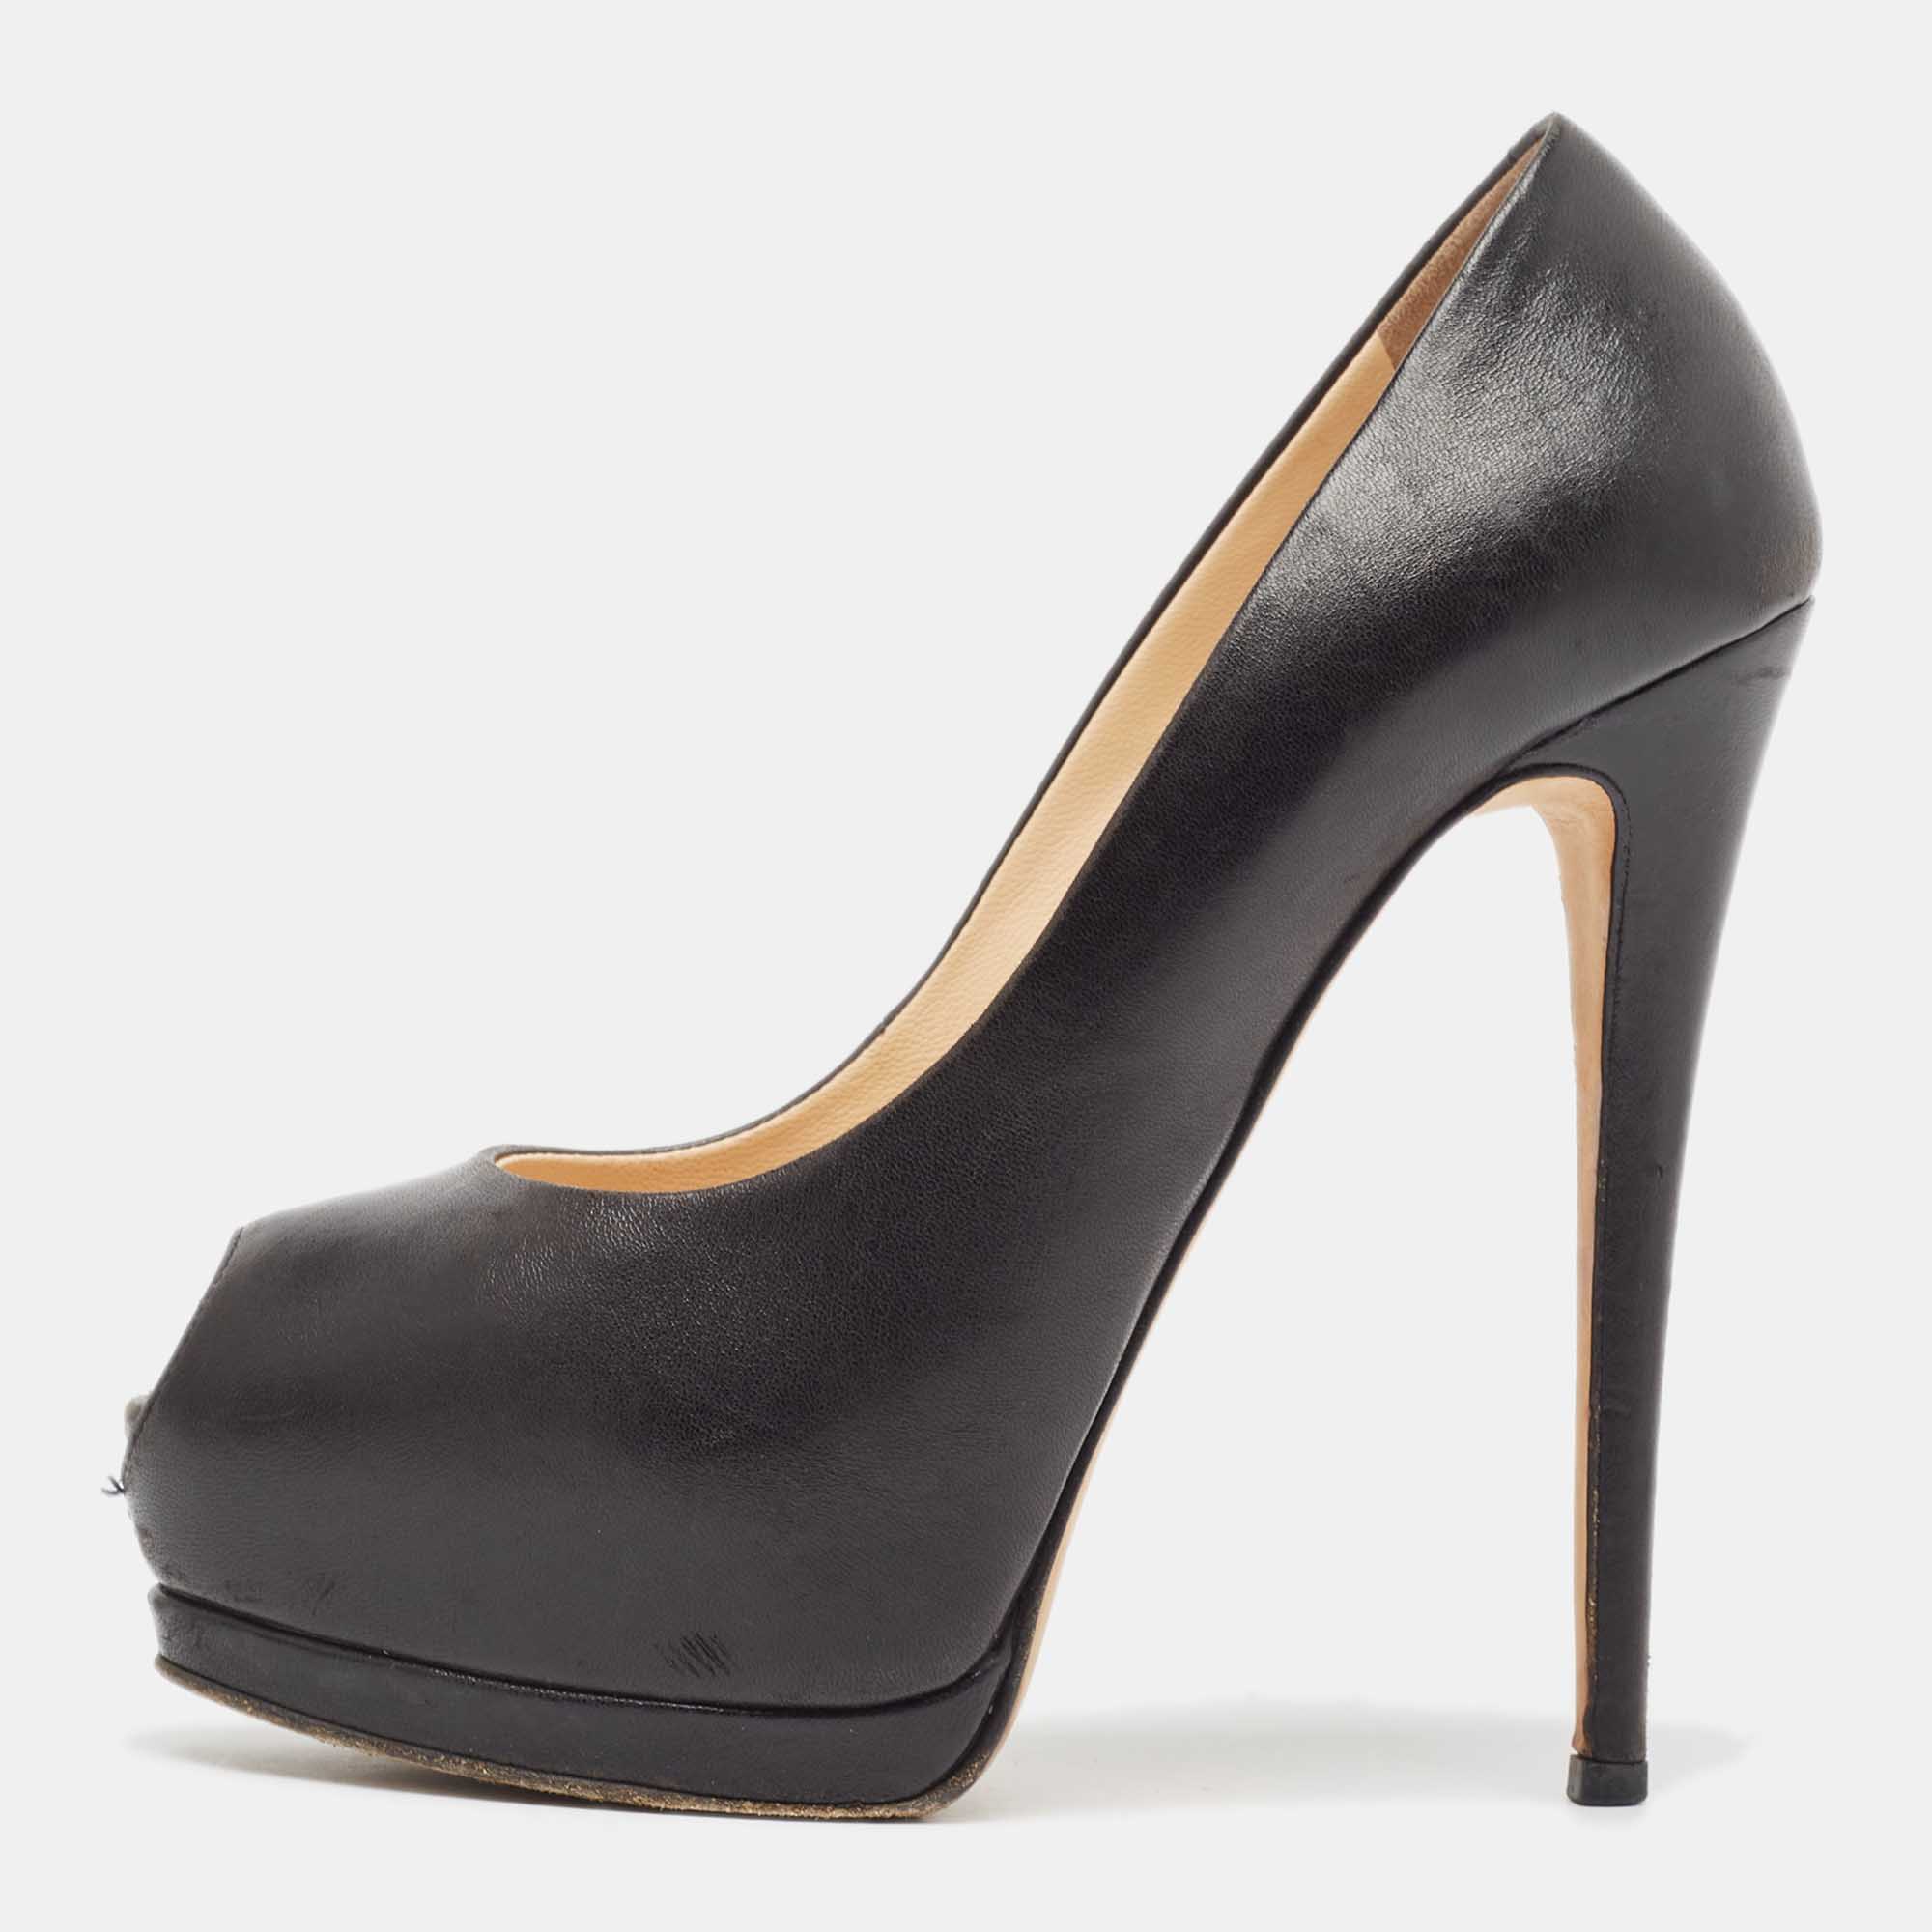 Giuseppe zanotti black leather peep toe pumps size 37.5